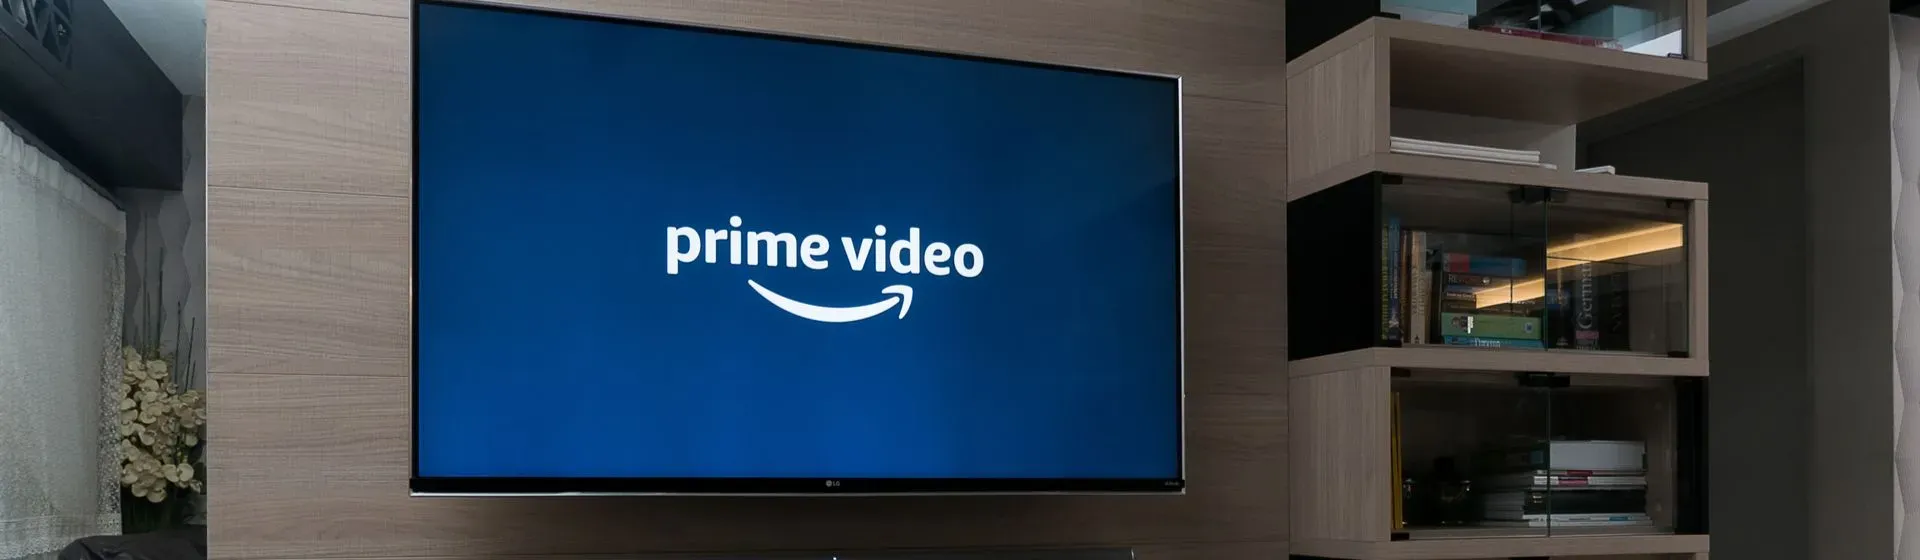 Como assistir Amazon Prime na TV? Confira o passo a passo